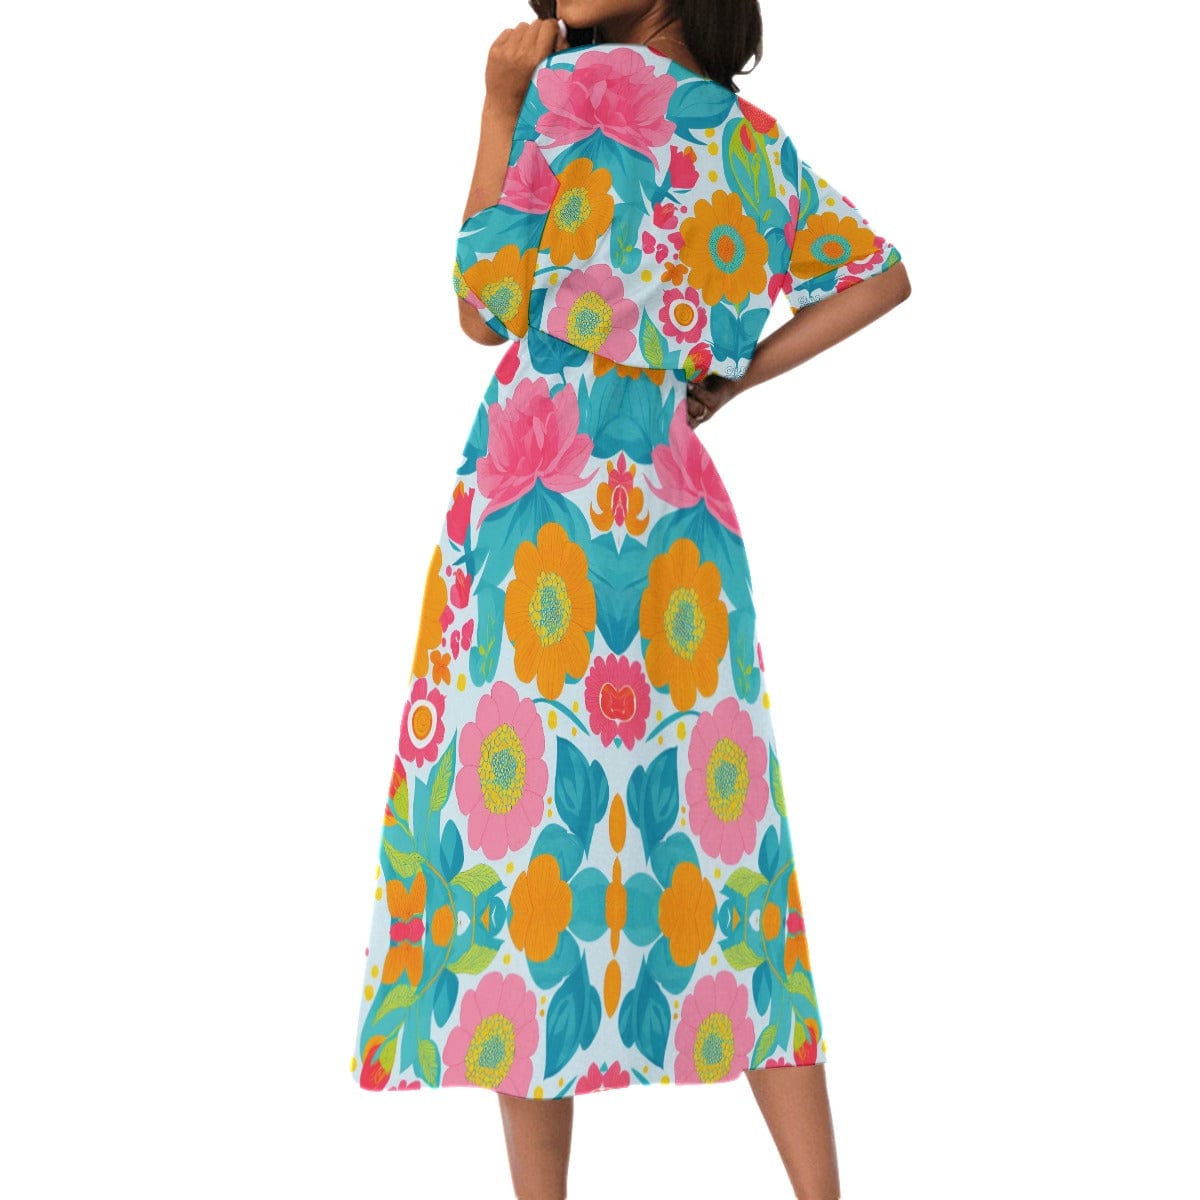 Yoycol Aruba Island Floral - Women's Elastic Waist Dress